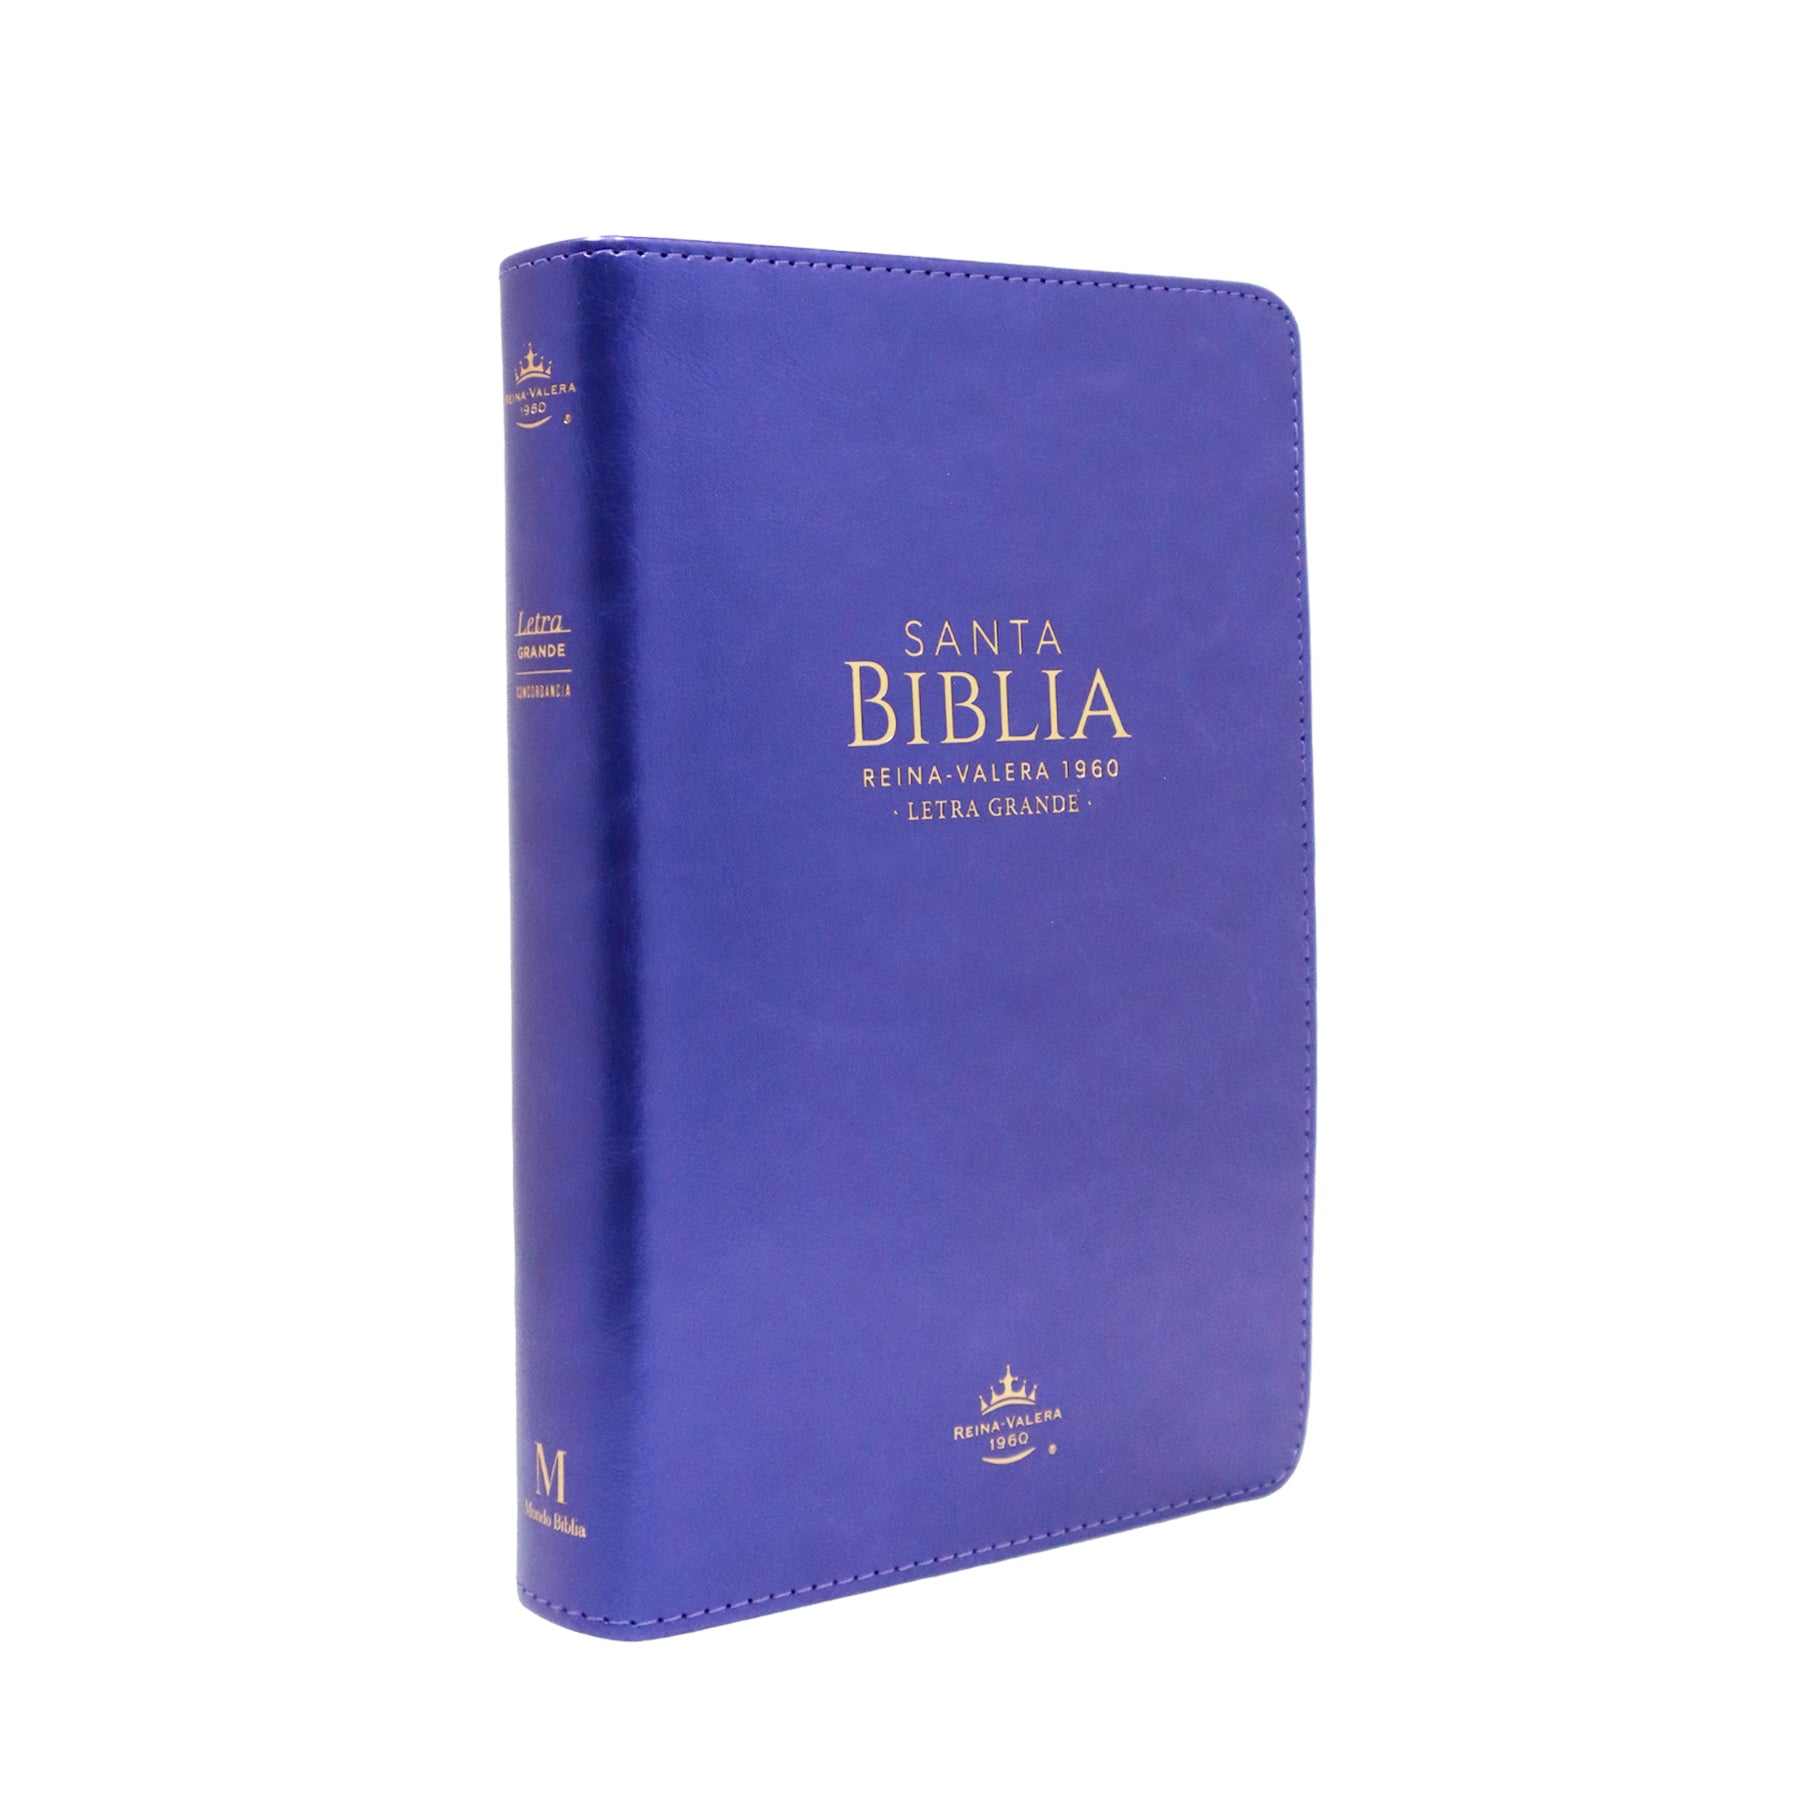 BIBLIA REINA VALERA 1960 LETRA GRANDE MANUAL CLÁSICA